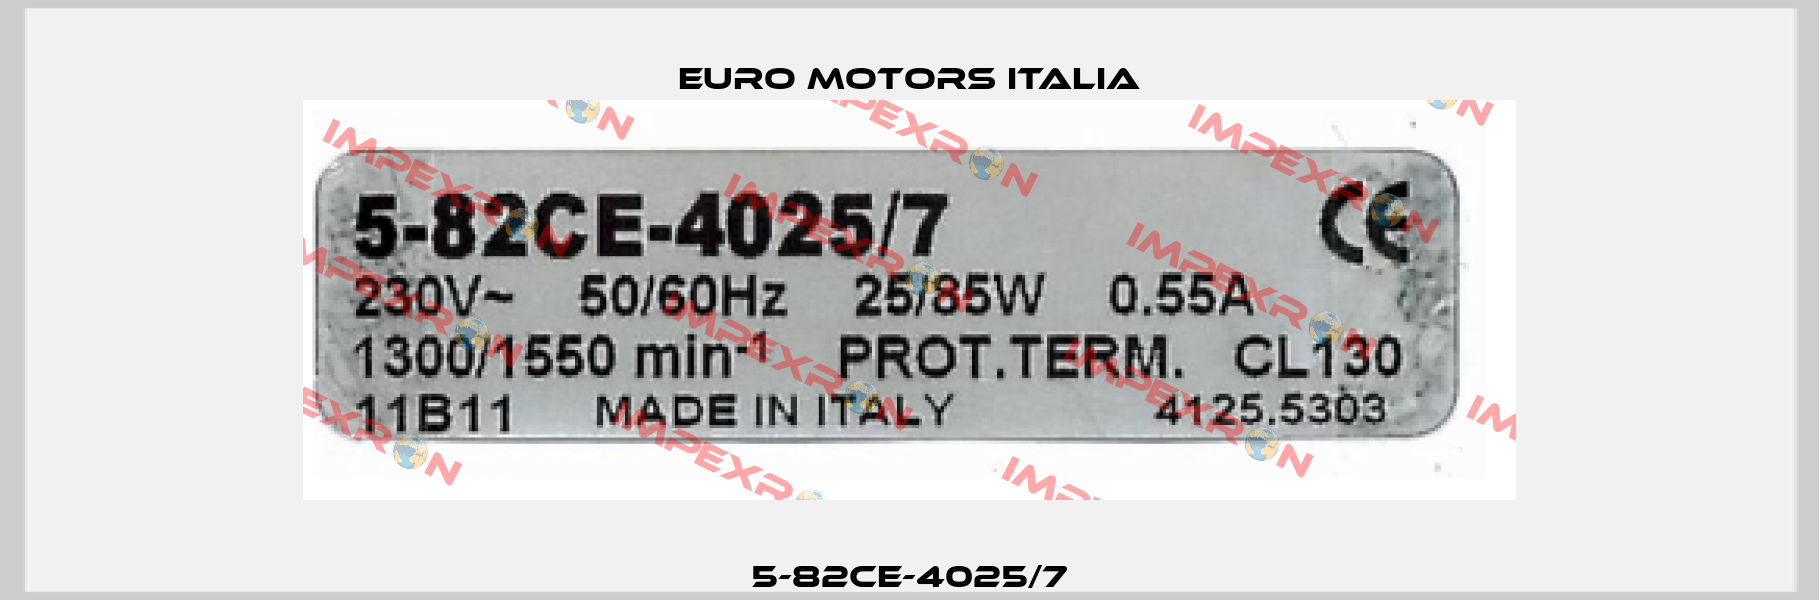 5-82CE-4025/7 Euro Motors Italia